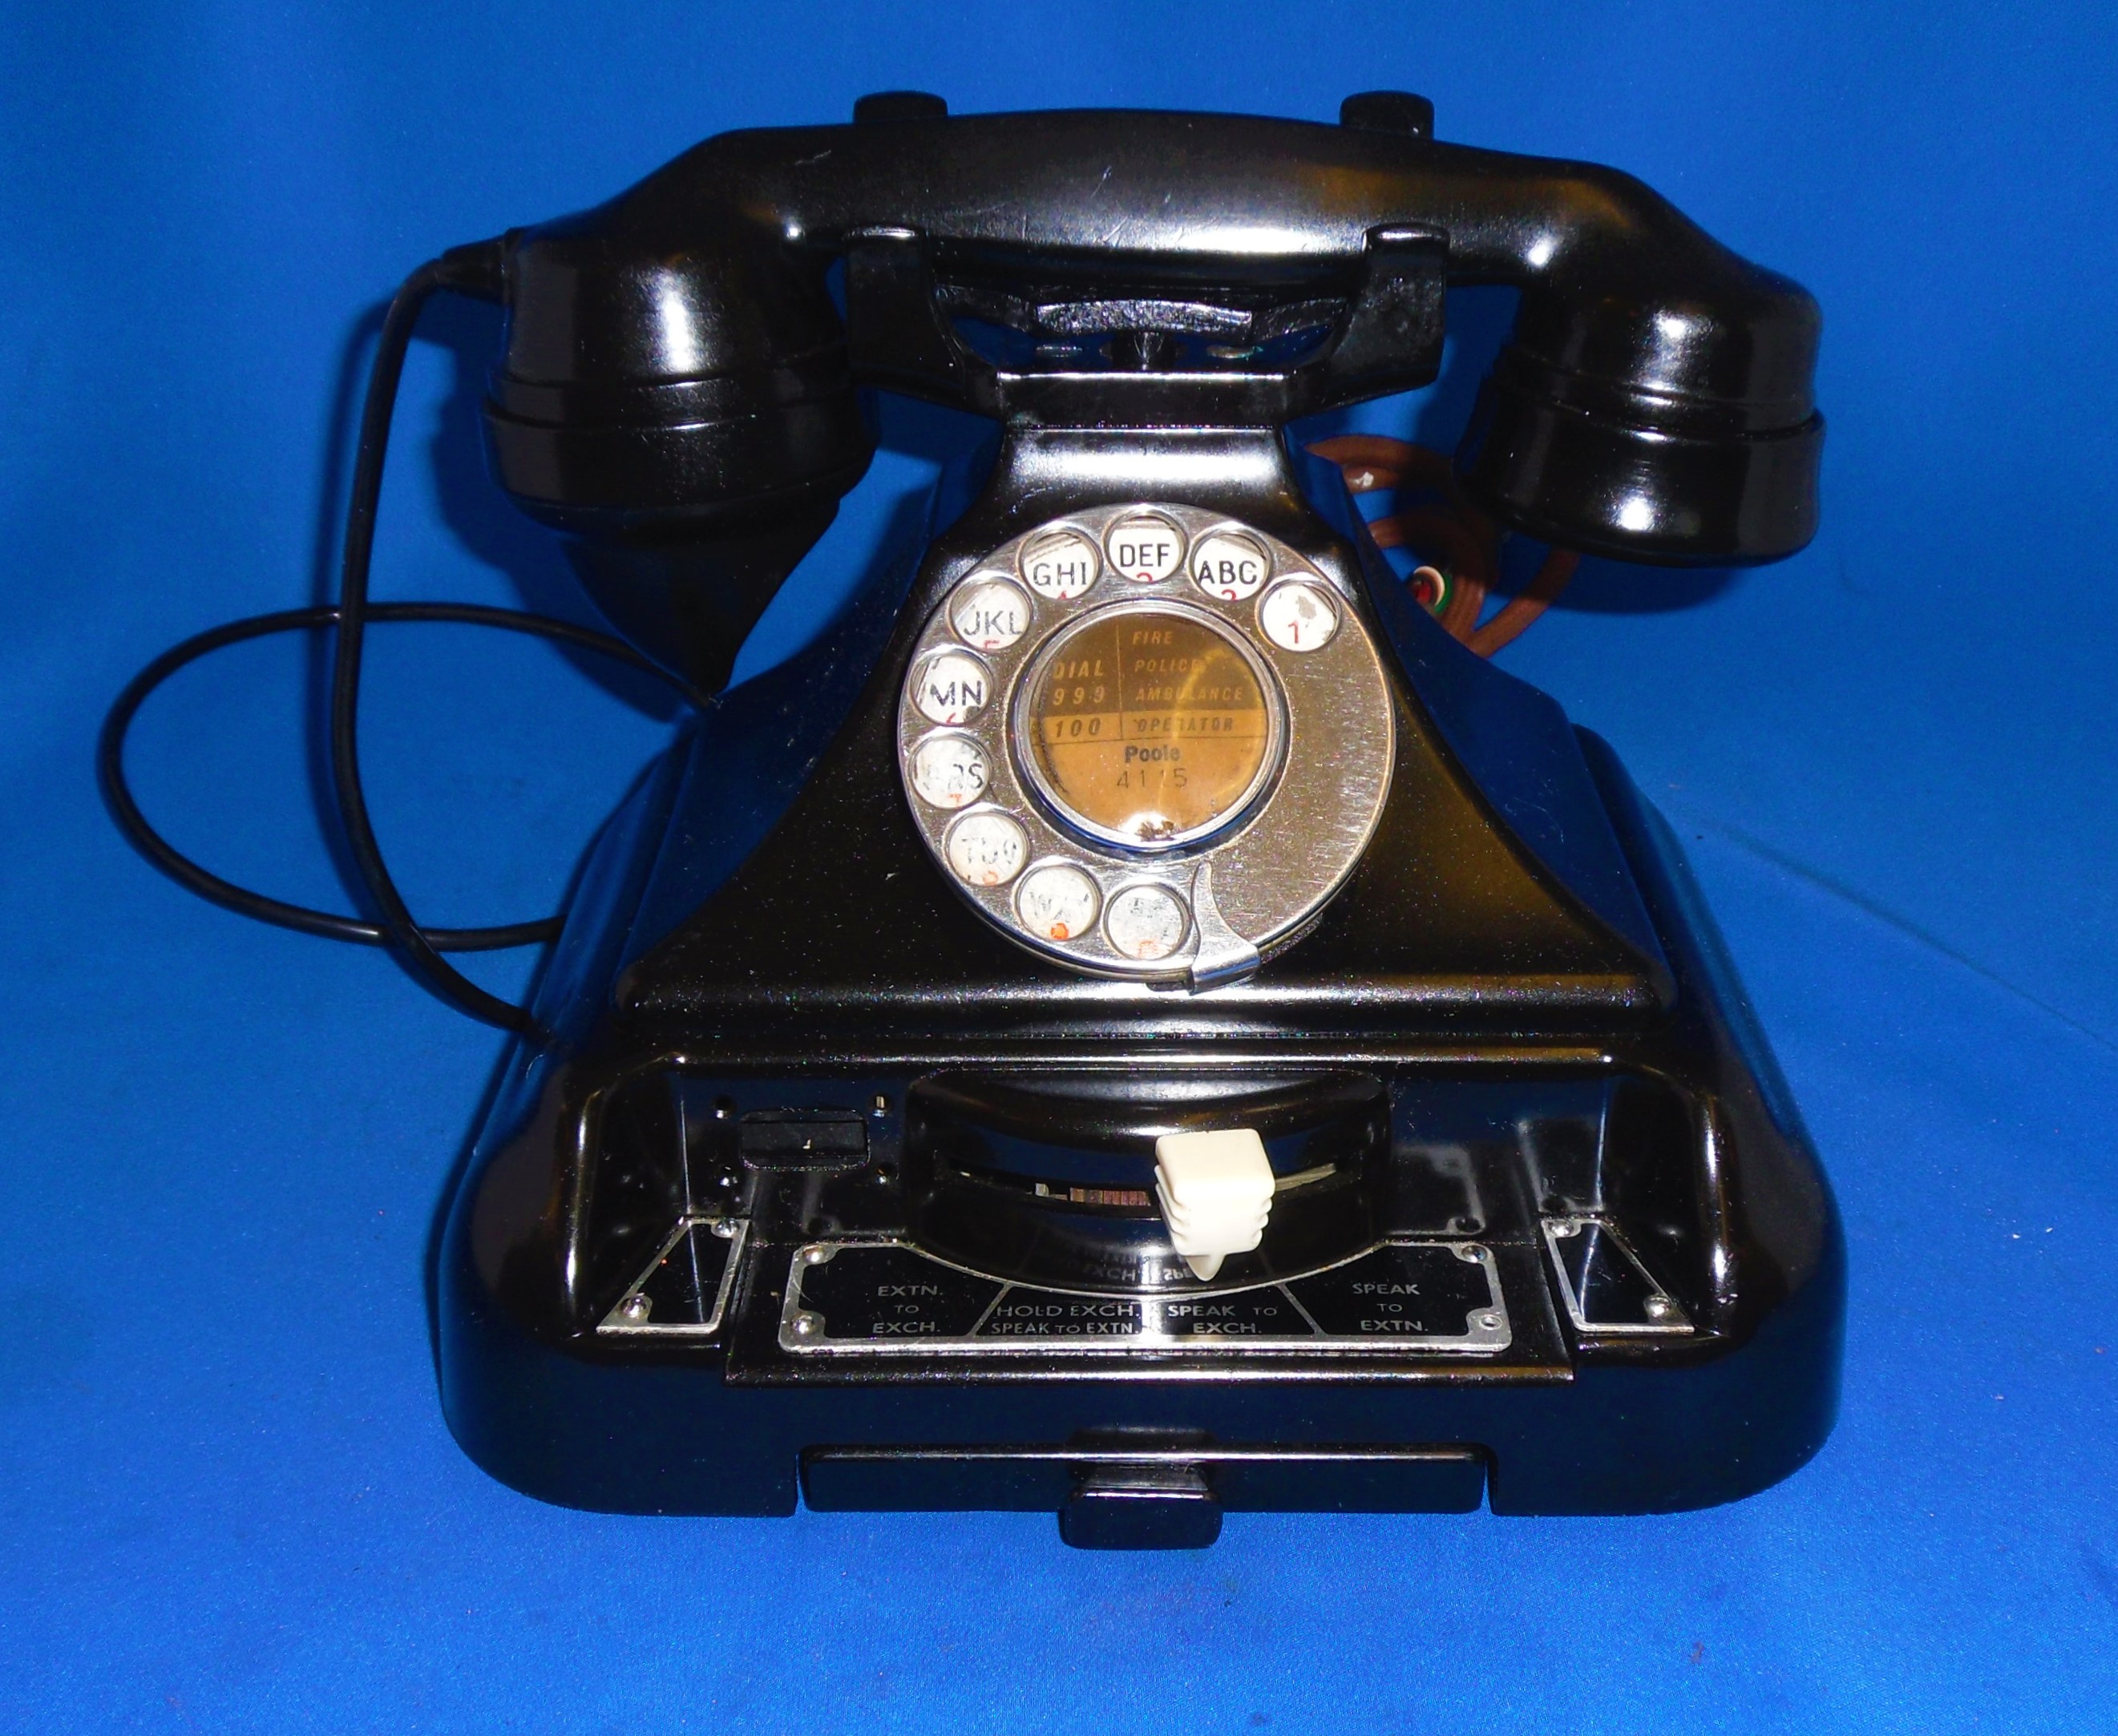 1930s Telephone Pyramid GPO King with Intercom Switching 232 Series Bakelite Telephone With Interco - Image 2 of 9